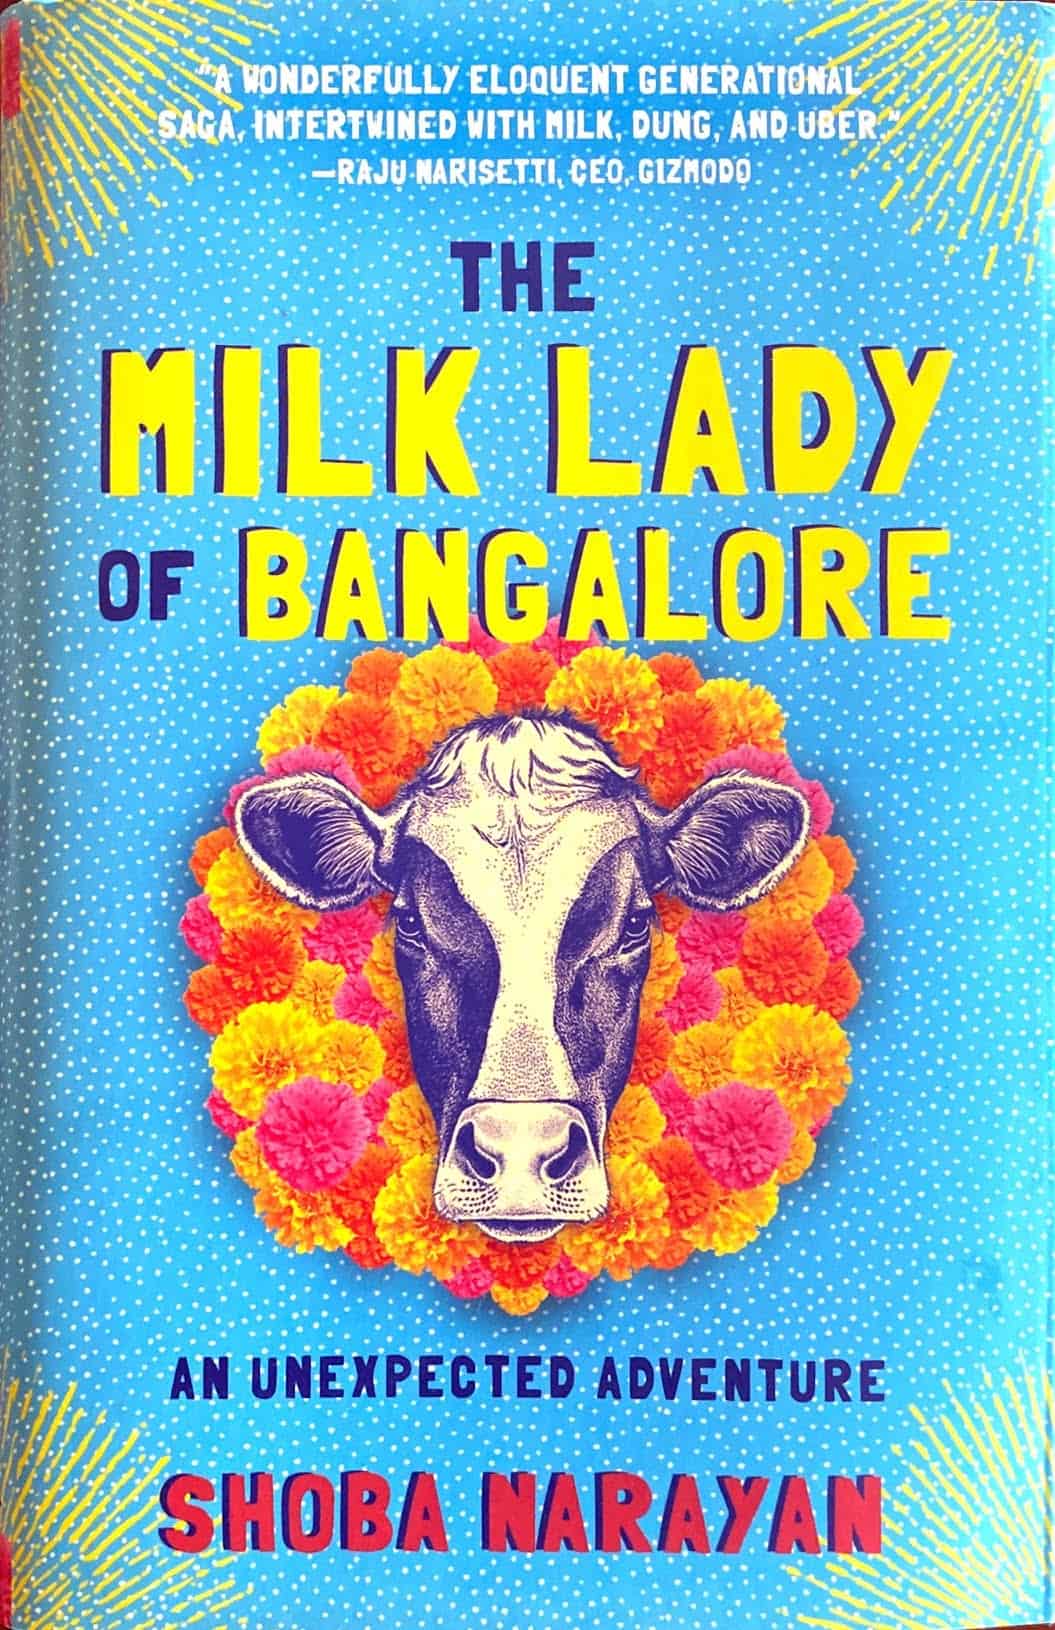 Hardcover edition of The Milk Lady of Bangalore by Shoba Narayan